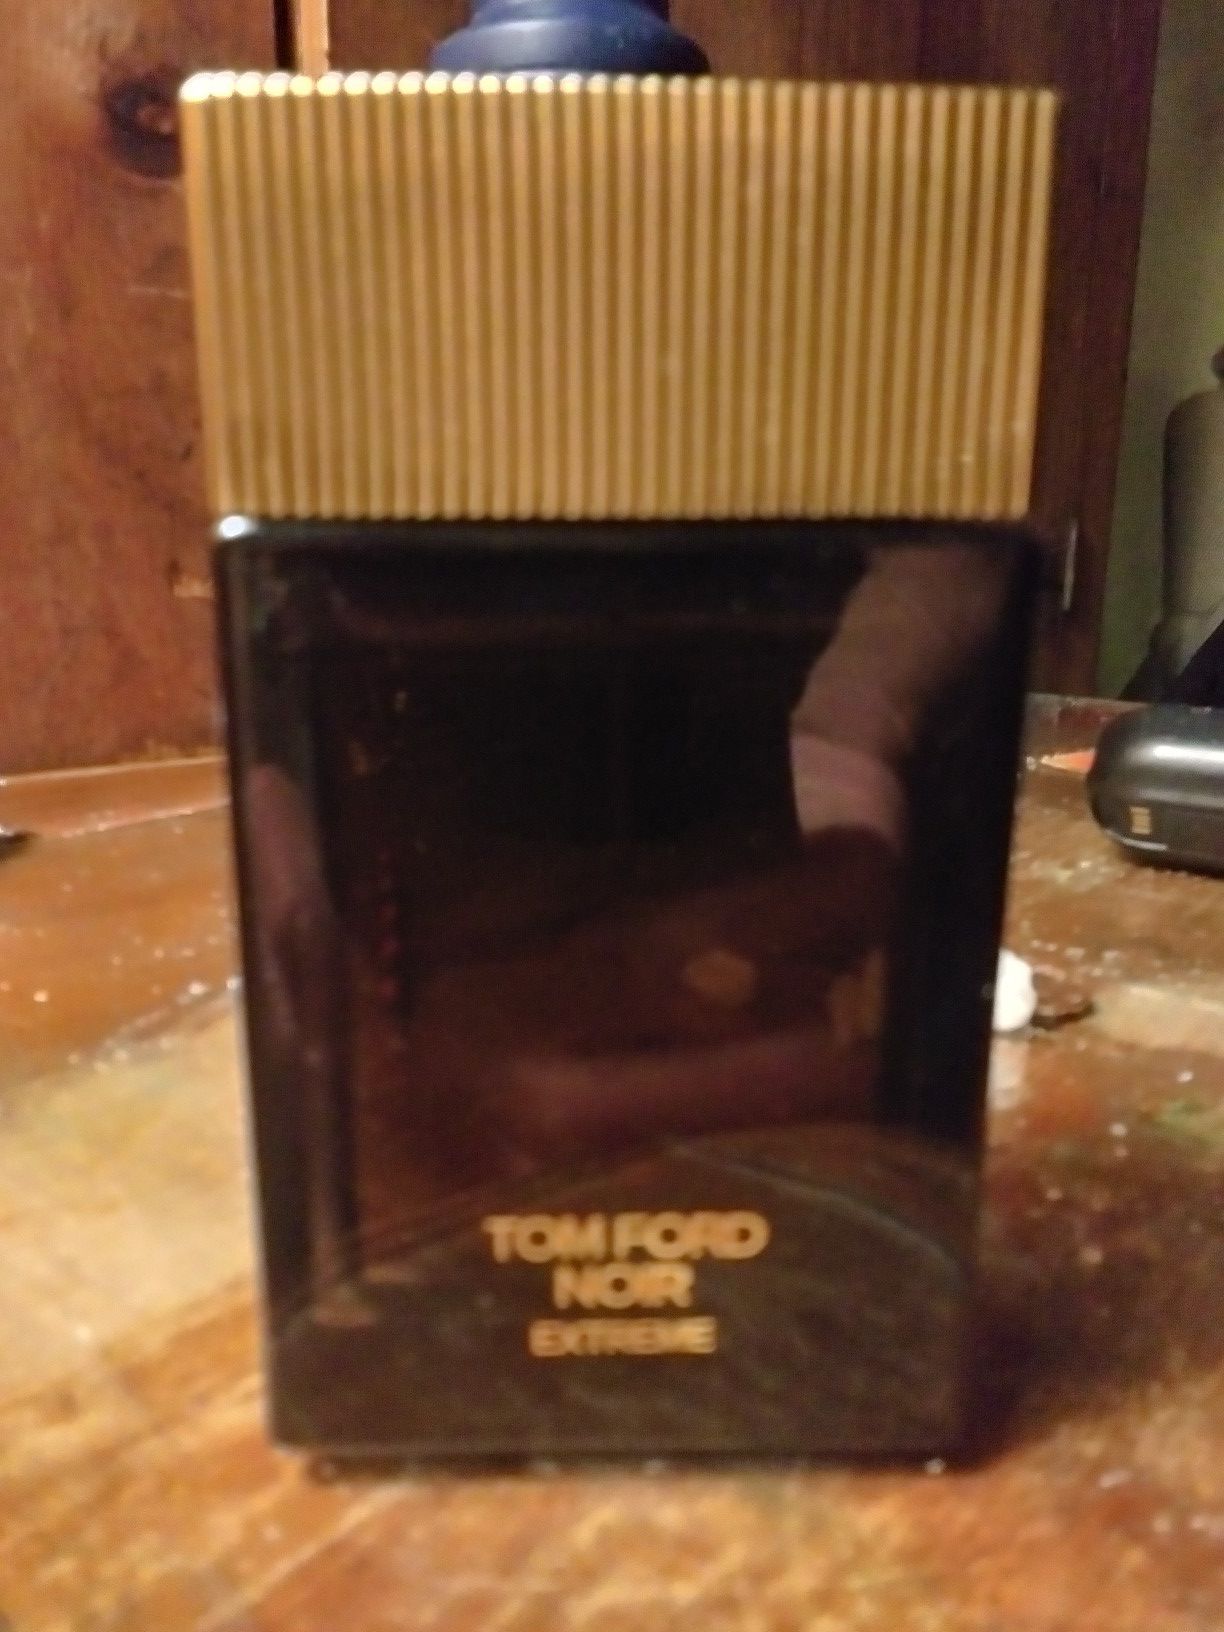 Tom Ford Noir Extreme Ladies Perfume 100ml